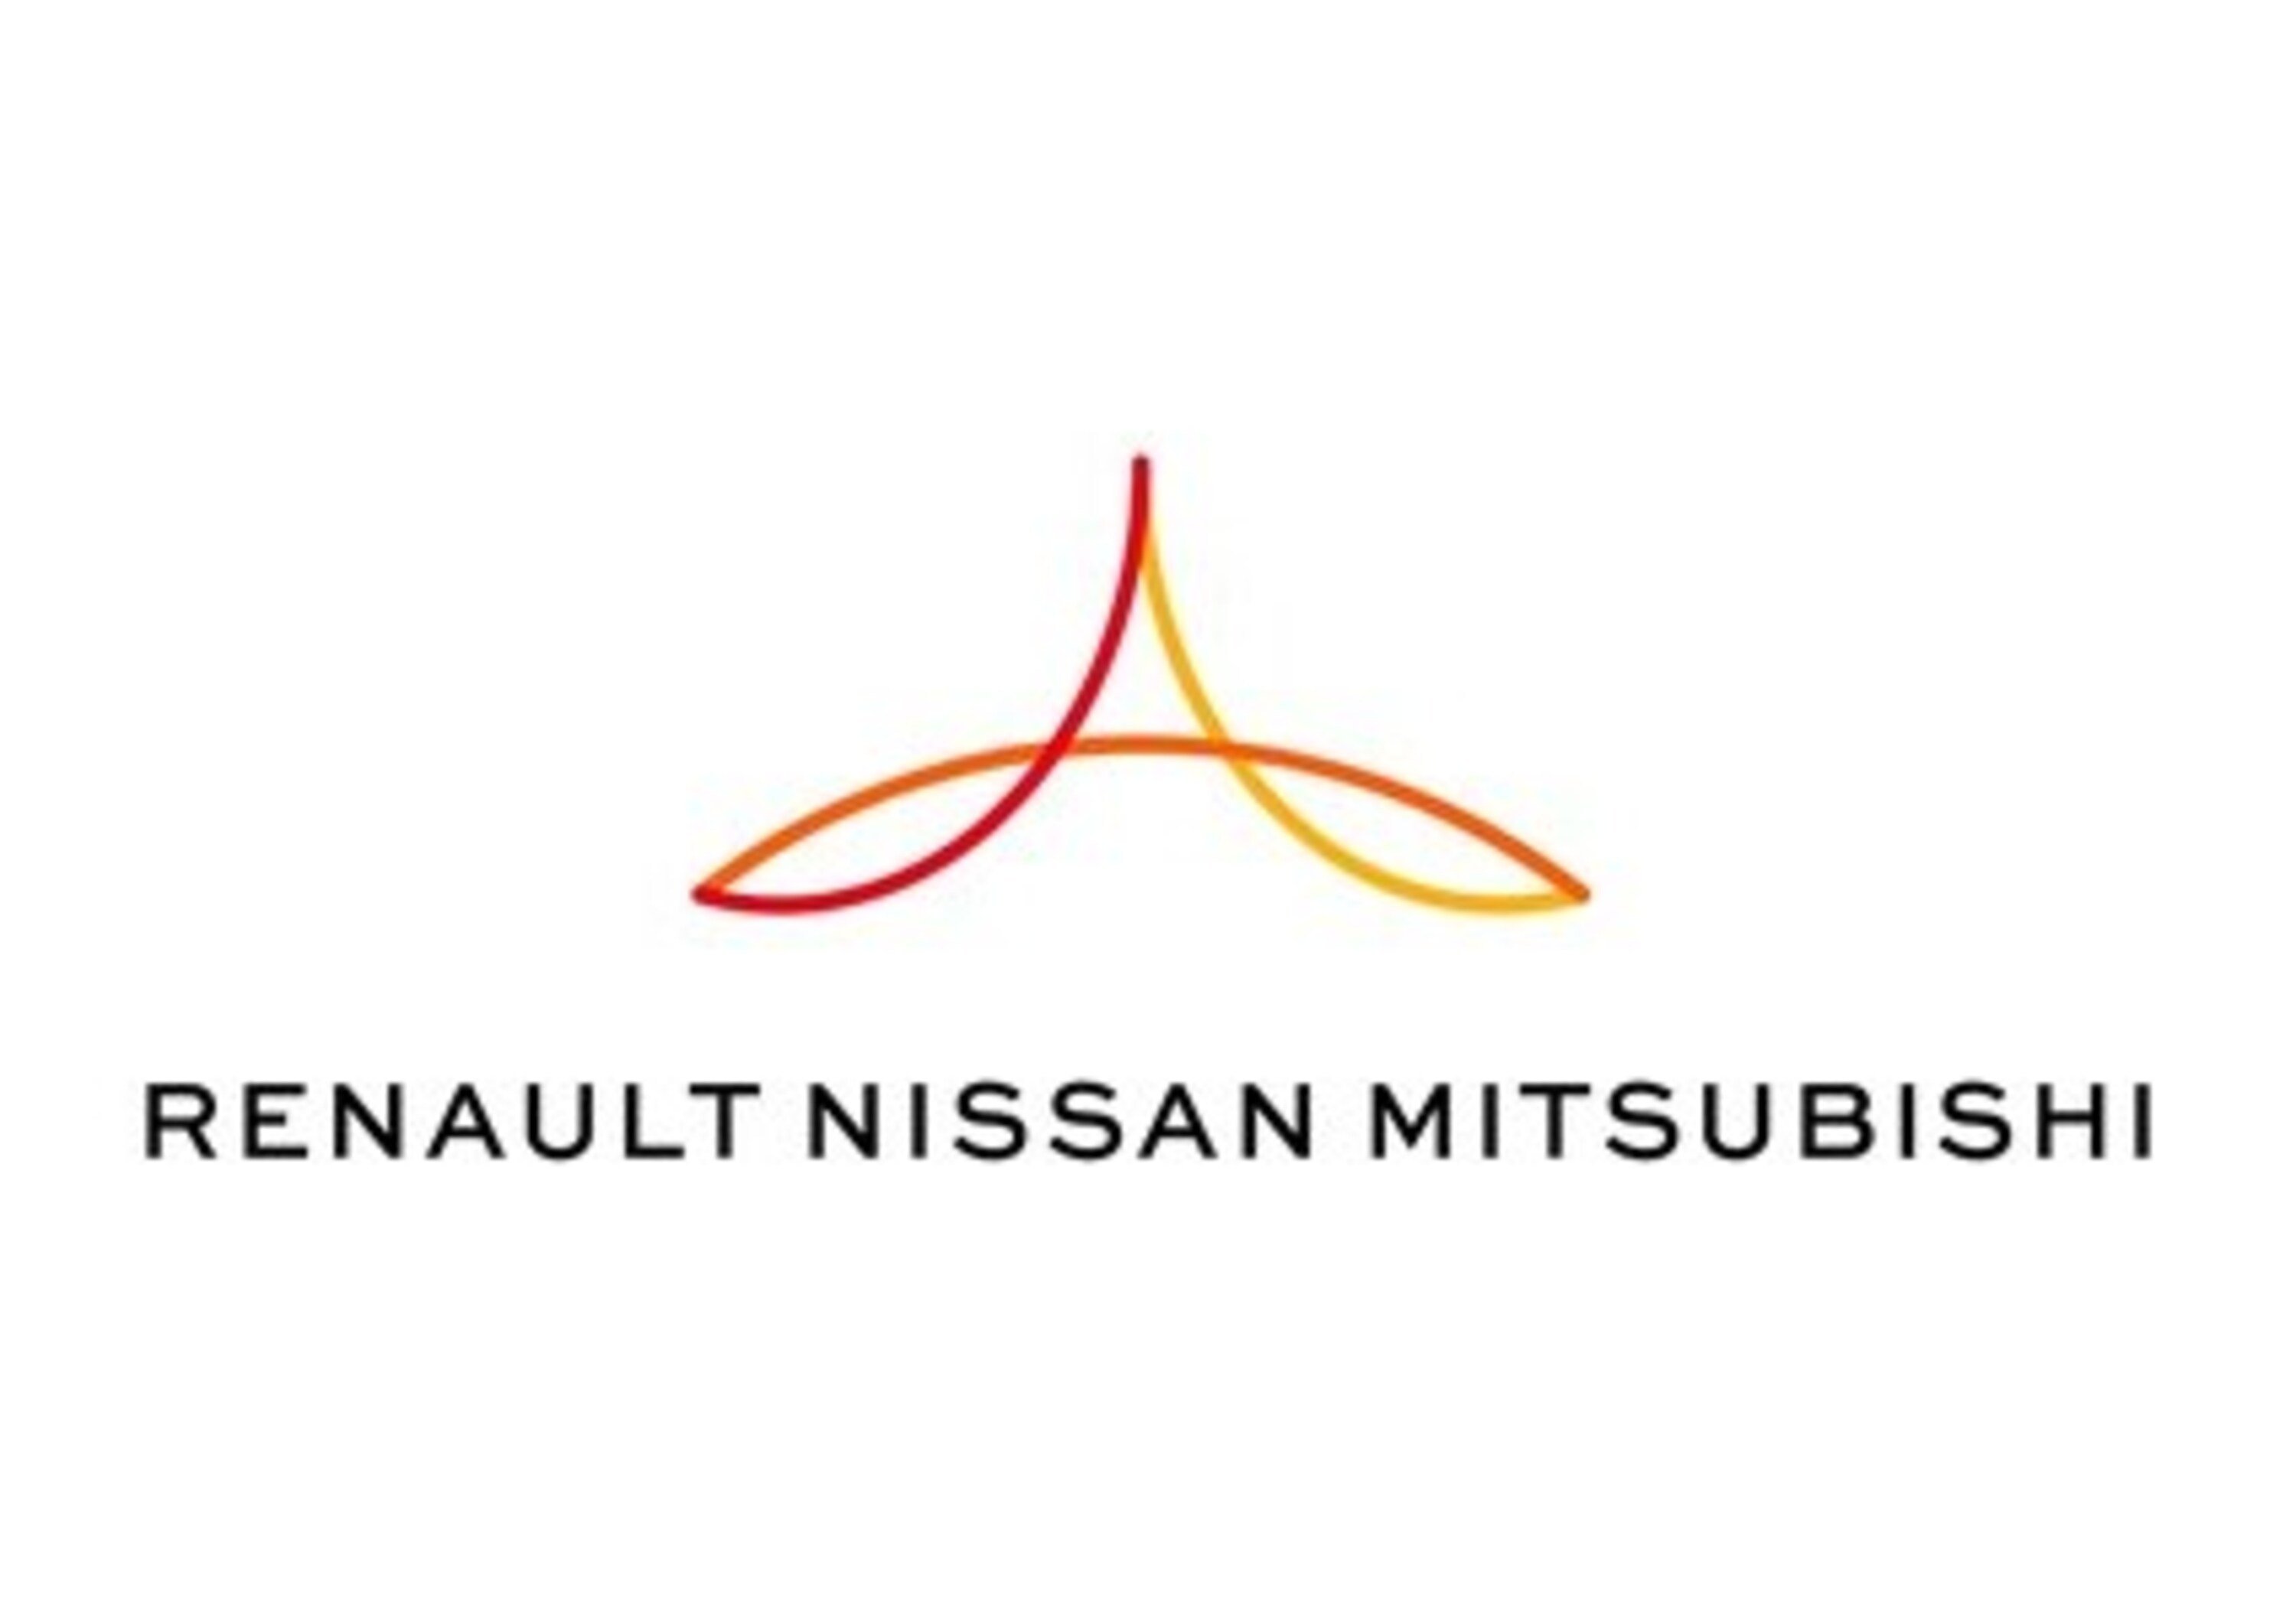 Alleanza Renault-Nissan-Mitsubishi, aumentano le sinergie annue